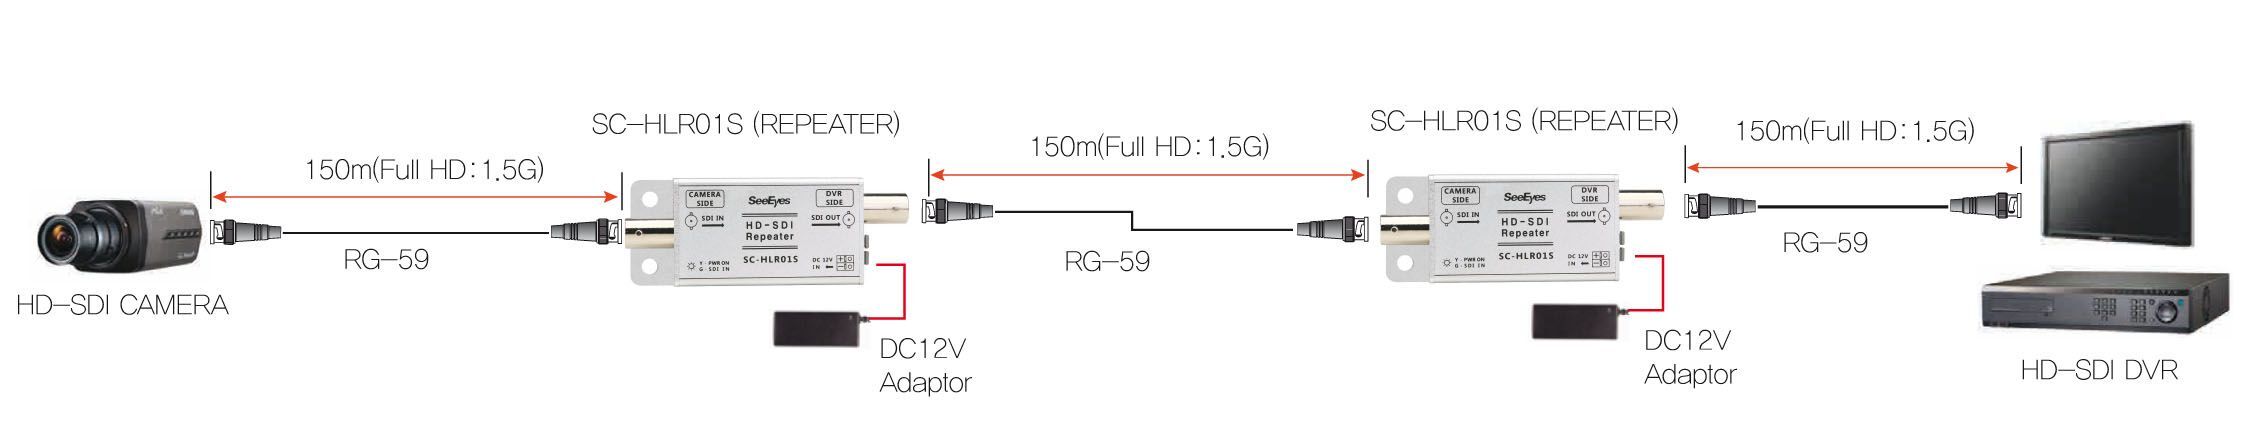 SC-HLR01P HD-SDI Repeater